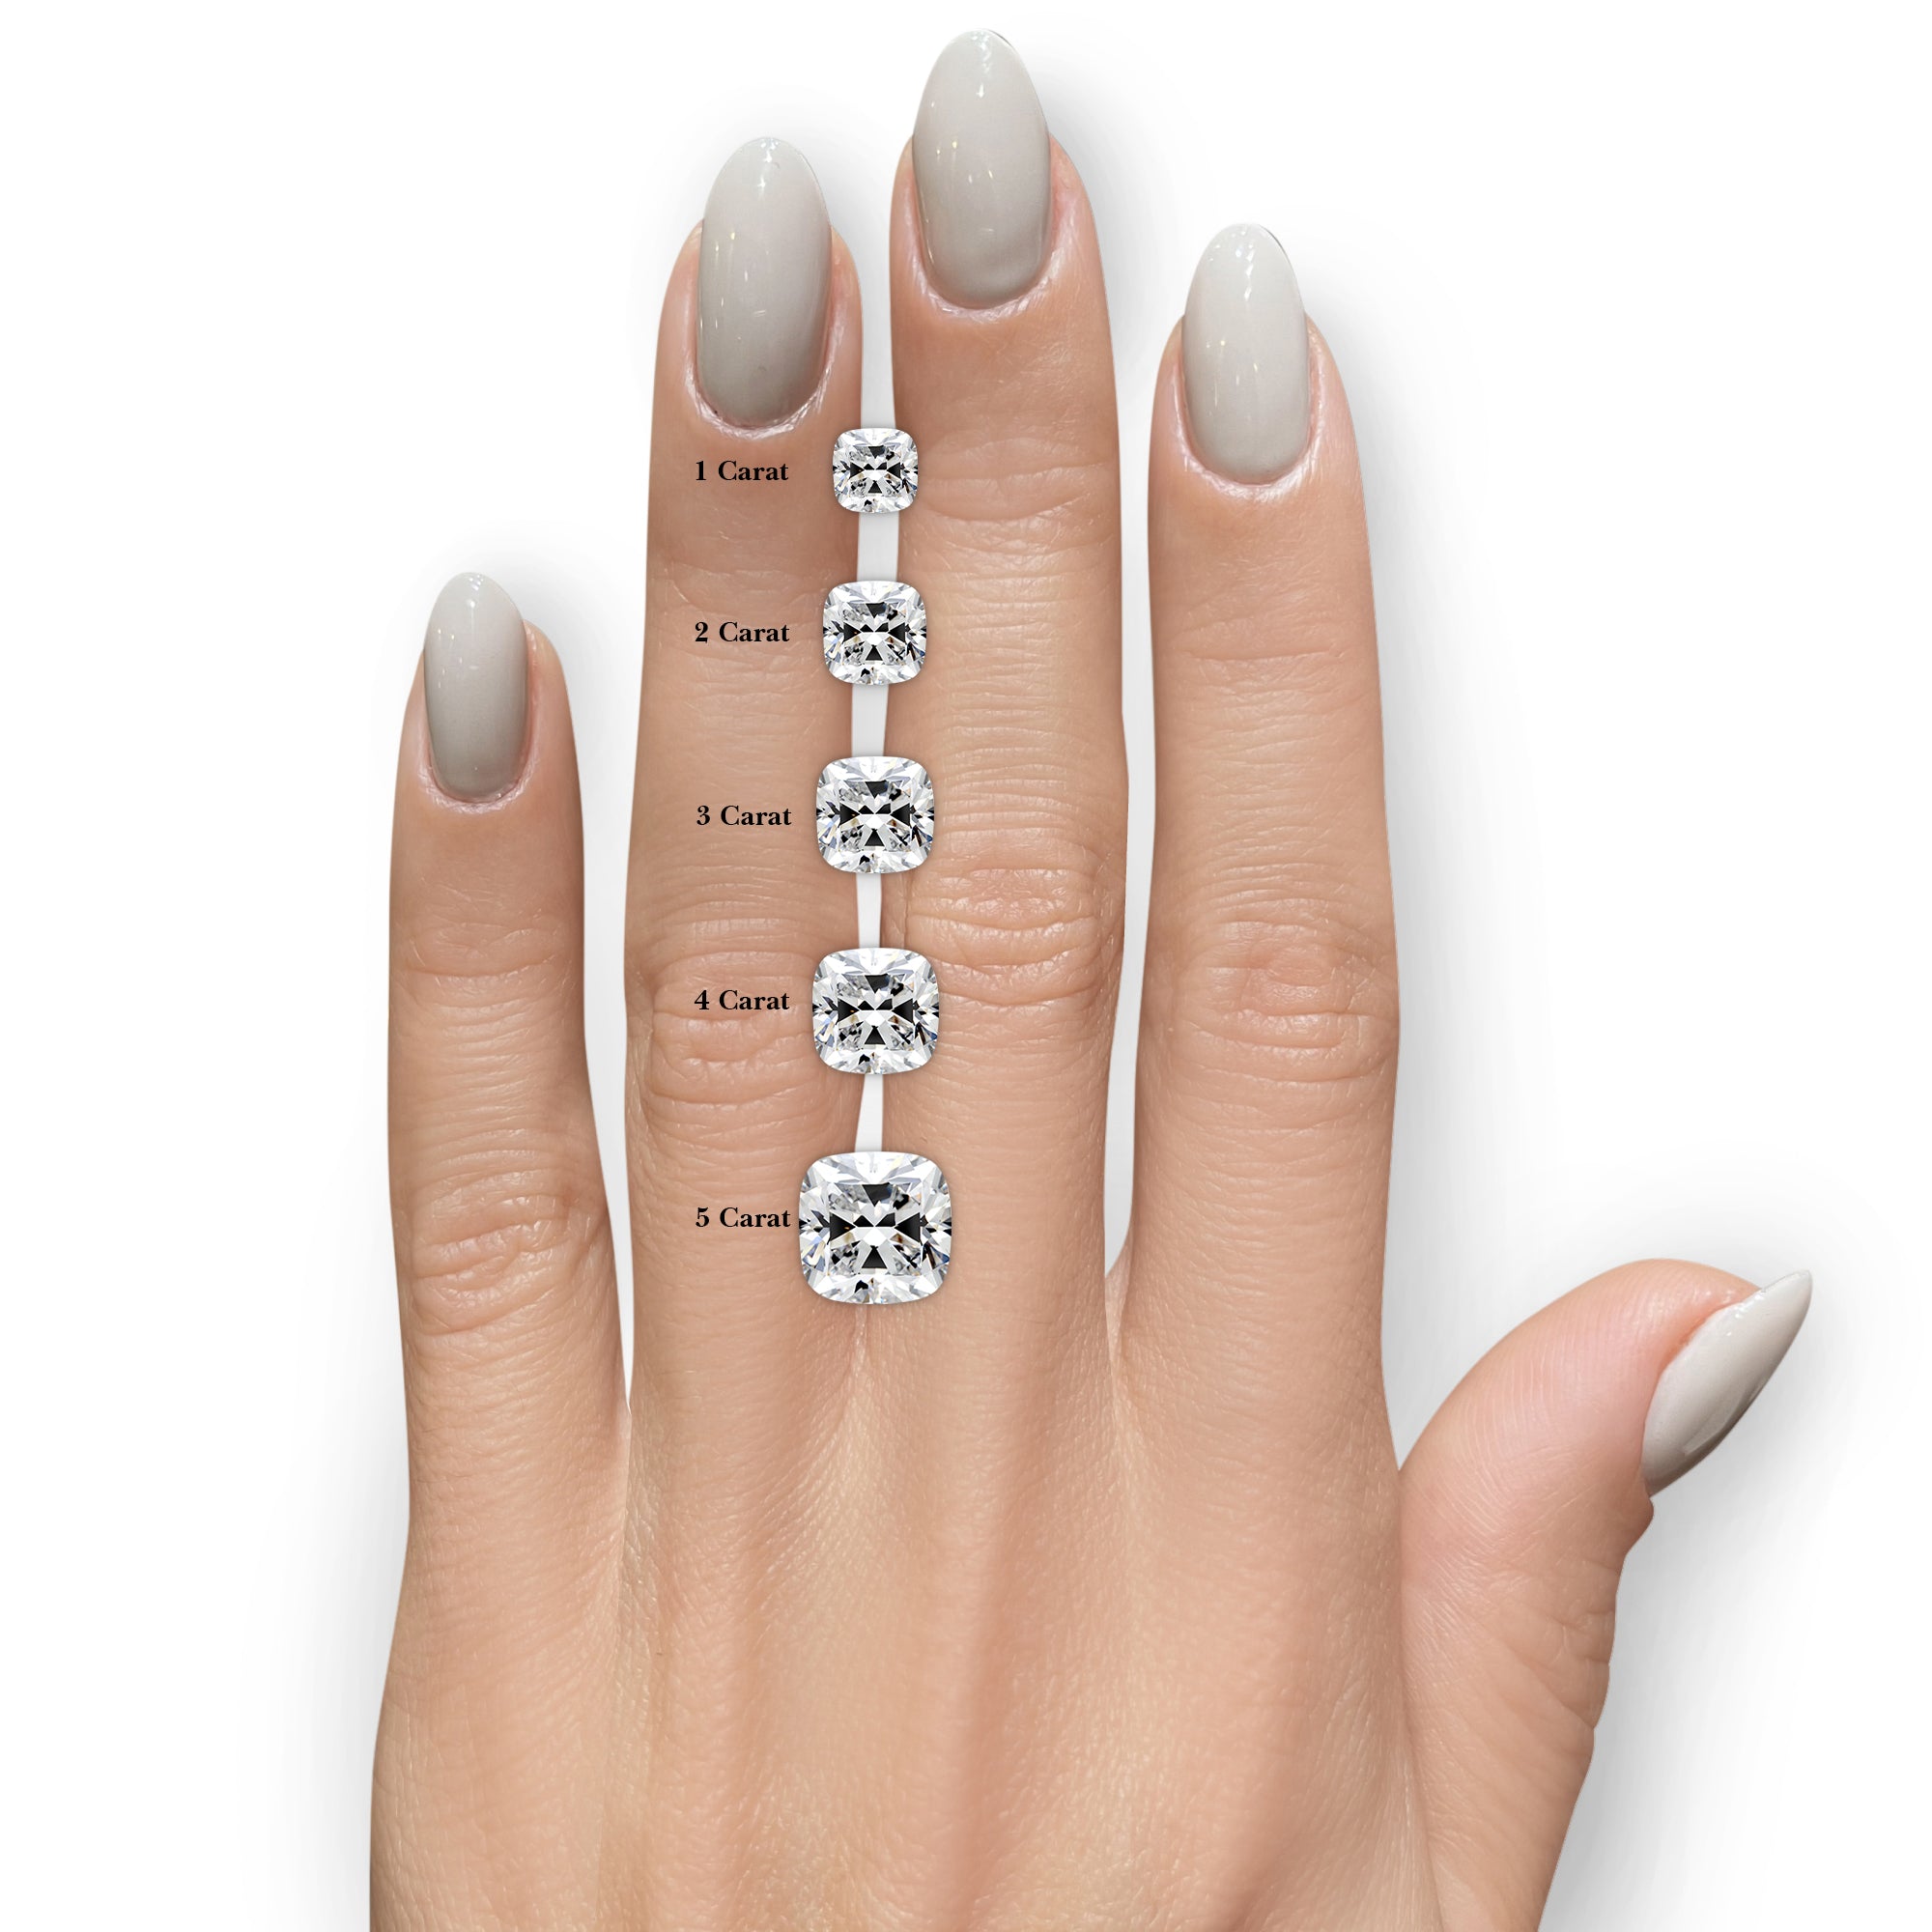 Beatriz Diamond Engagement Ring -Platinum